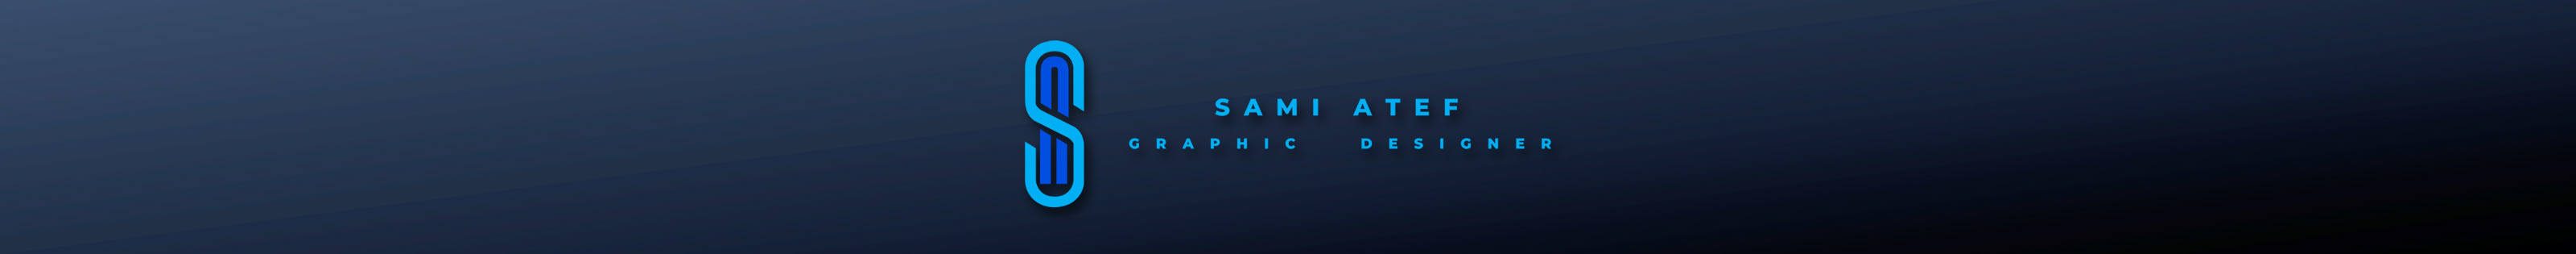 Sami Atef's profile banner